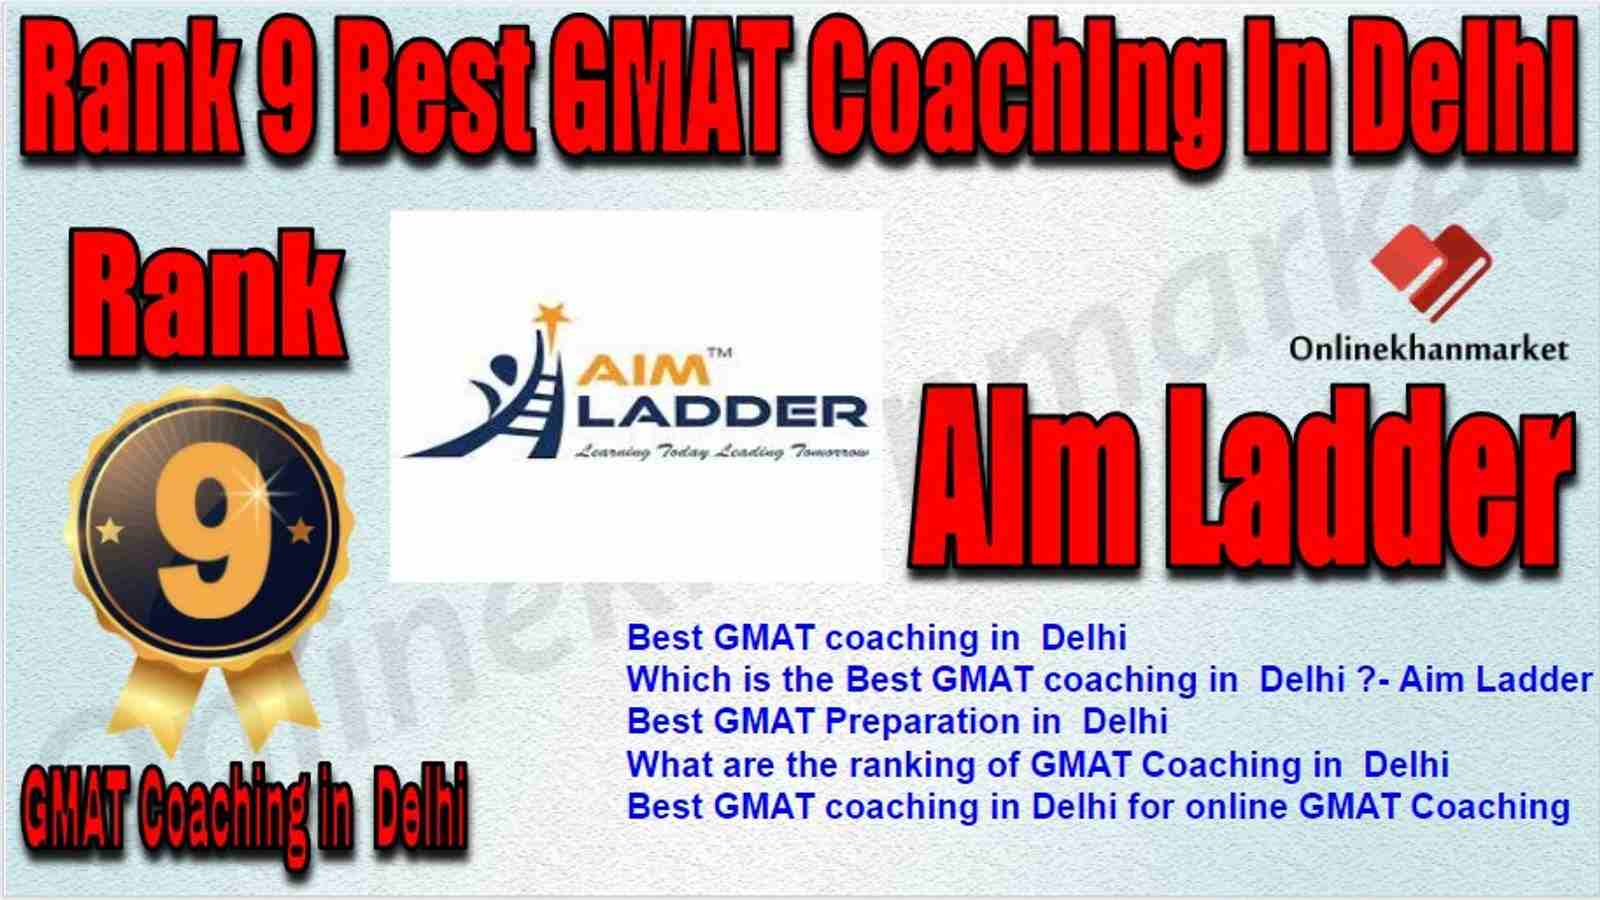 Rank 9 Best GMAT Coaching in Delhi